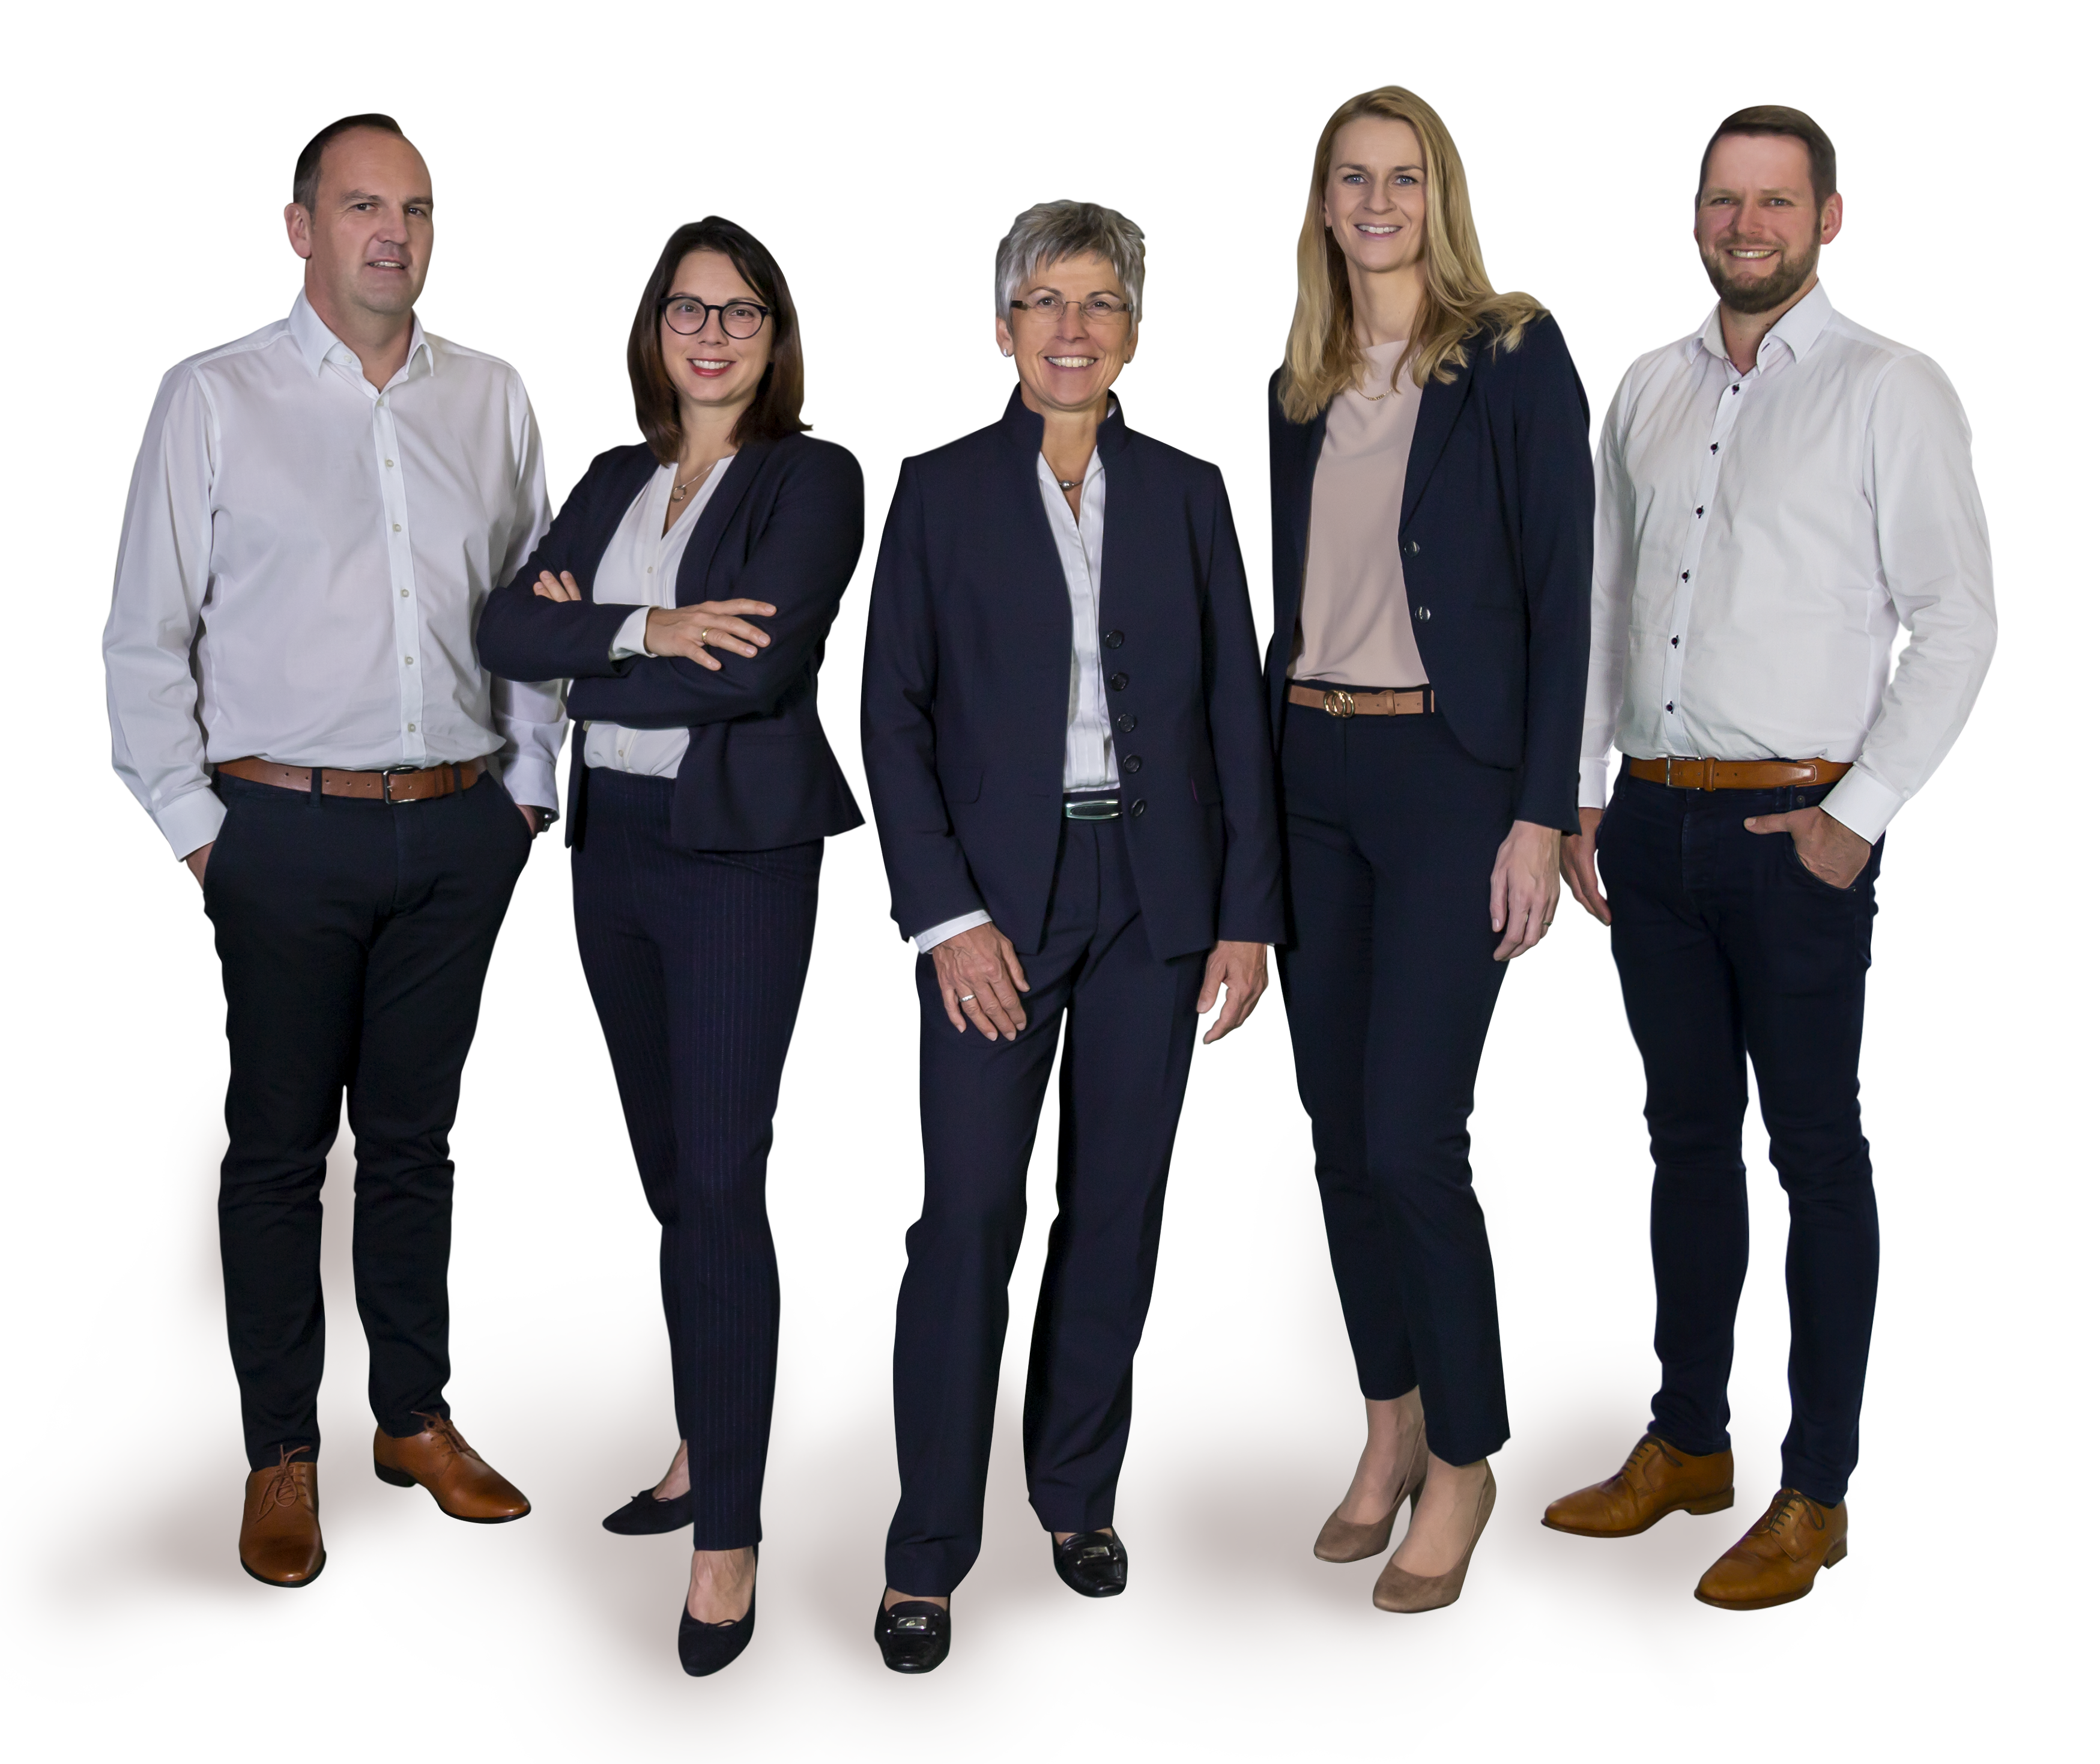 Spangler Management, consisting of: Christian Brandmüller, Tina Lambert, Hannelore Spangler-Schäfer, Cornelia Hofmann and Thomas Zenk